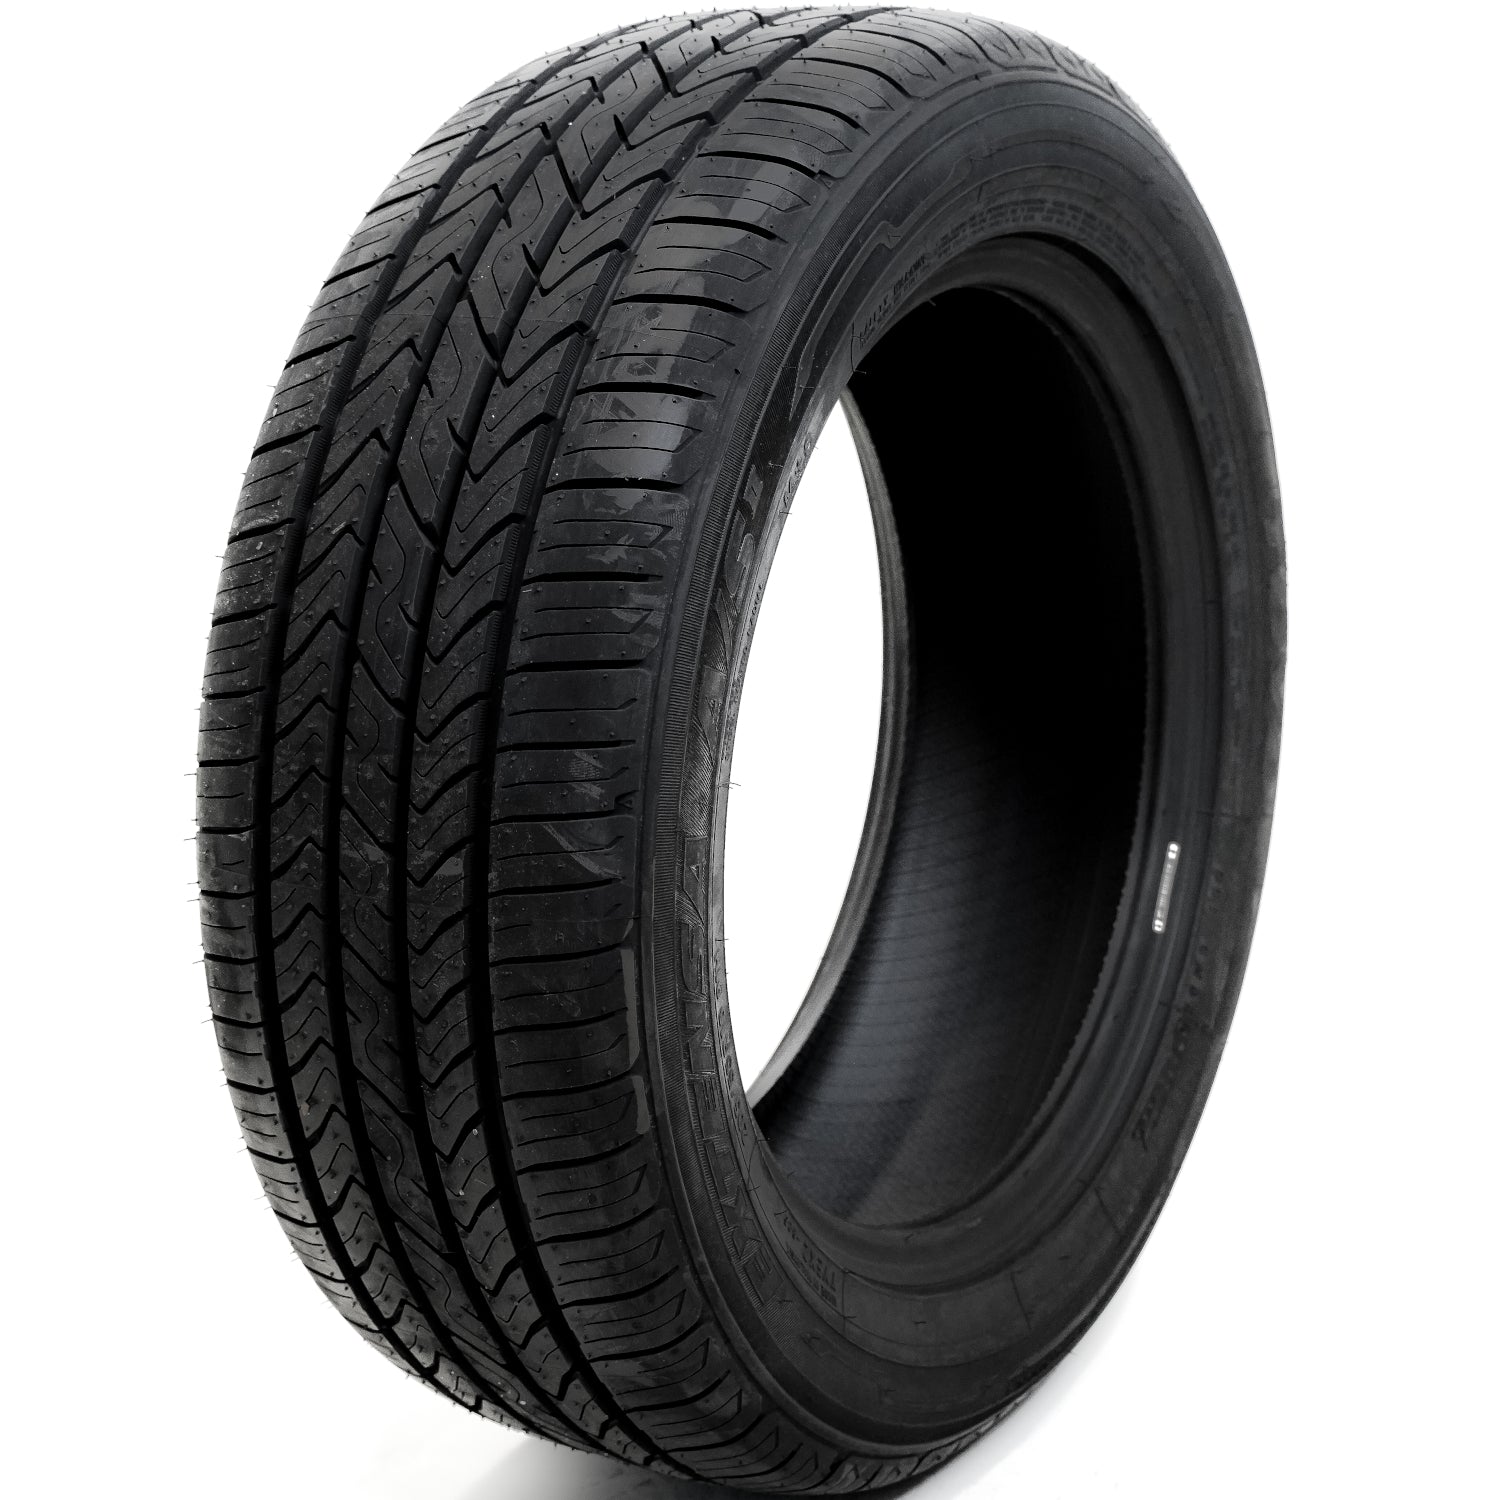 TOYO TIRES EXTENSA A/S II 235/65R17 (29.1X9.3R 17) Tires